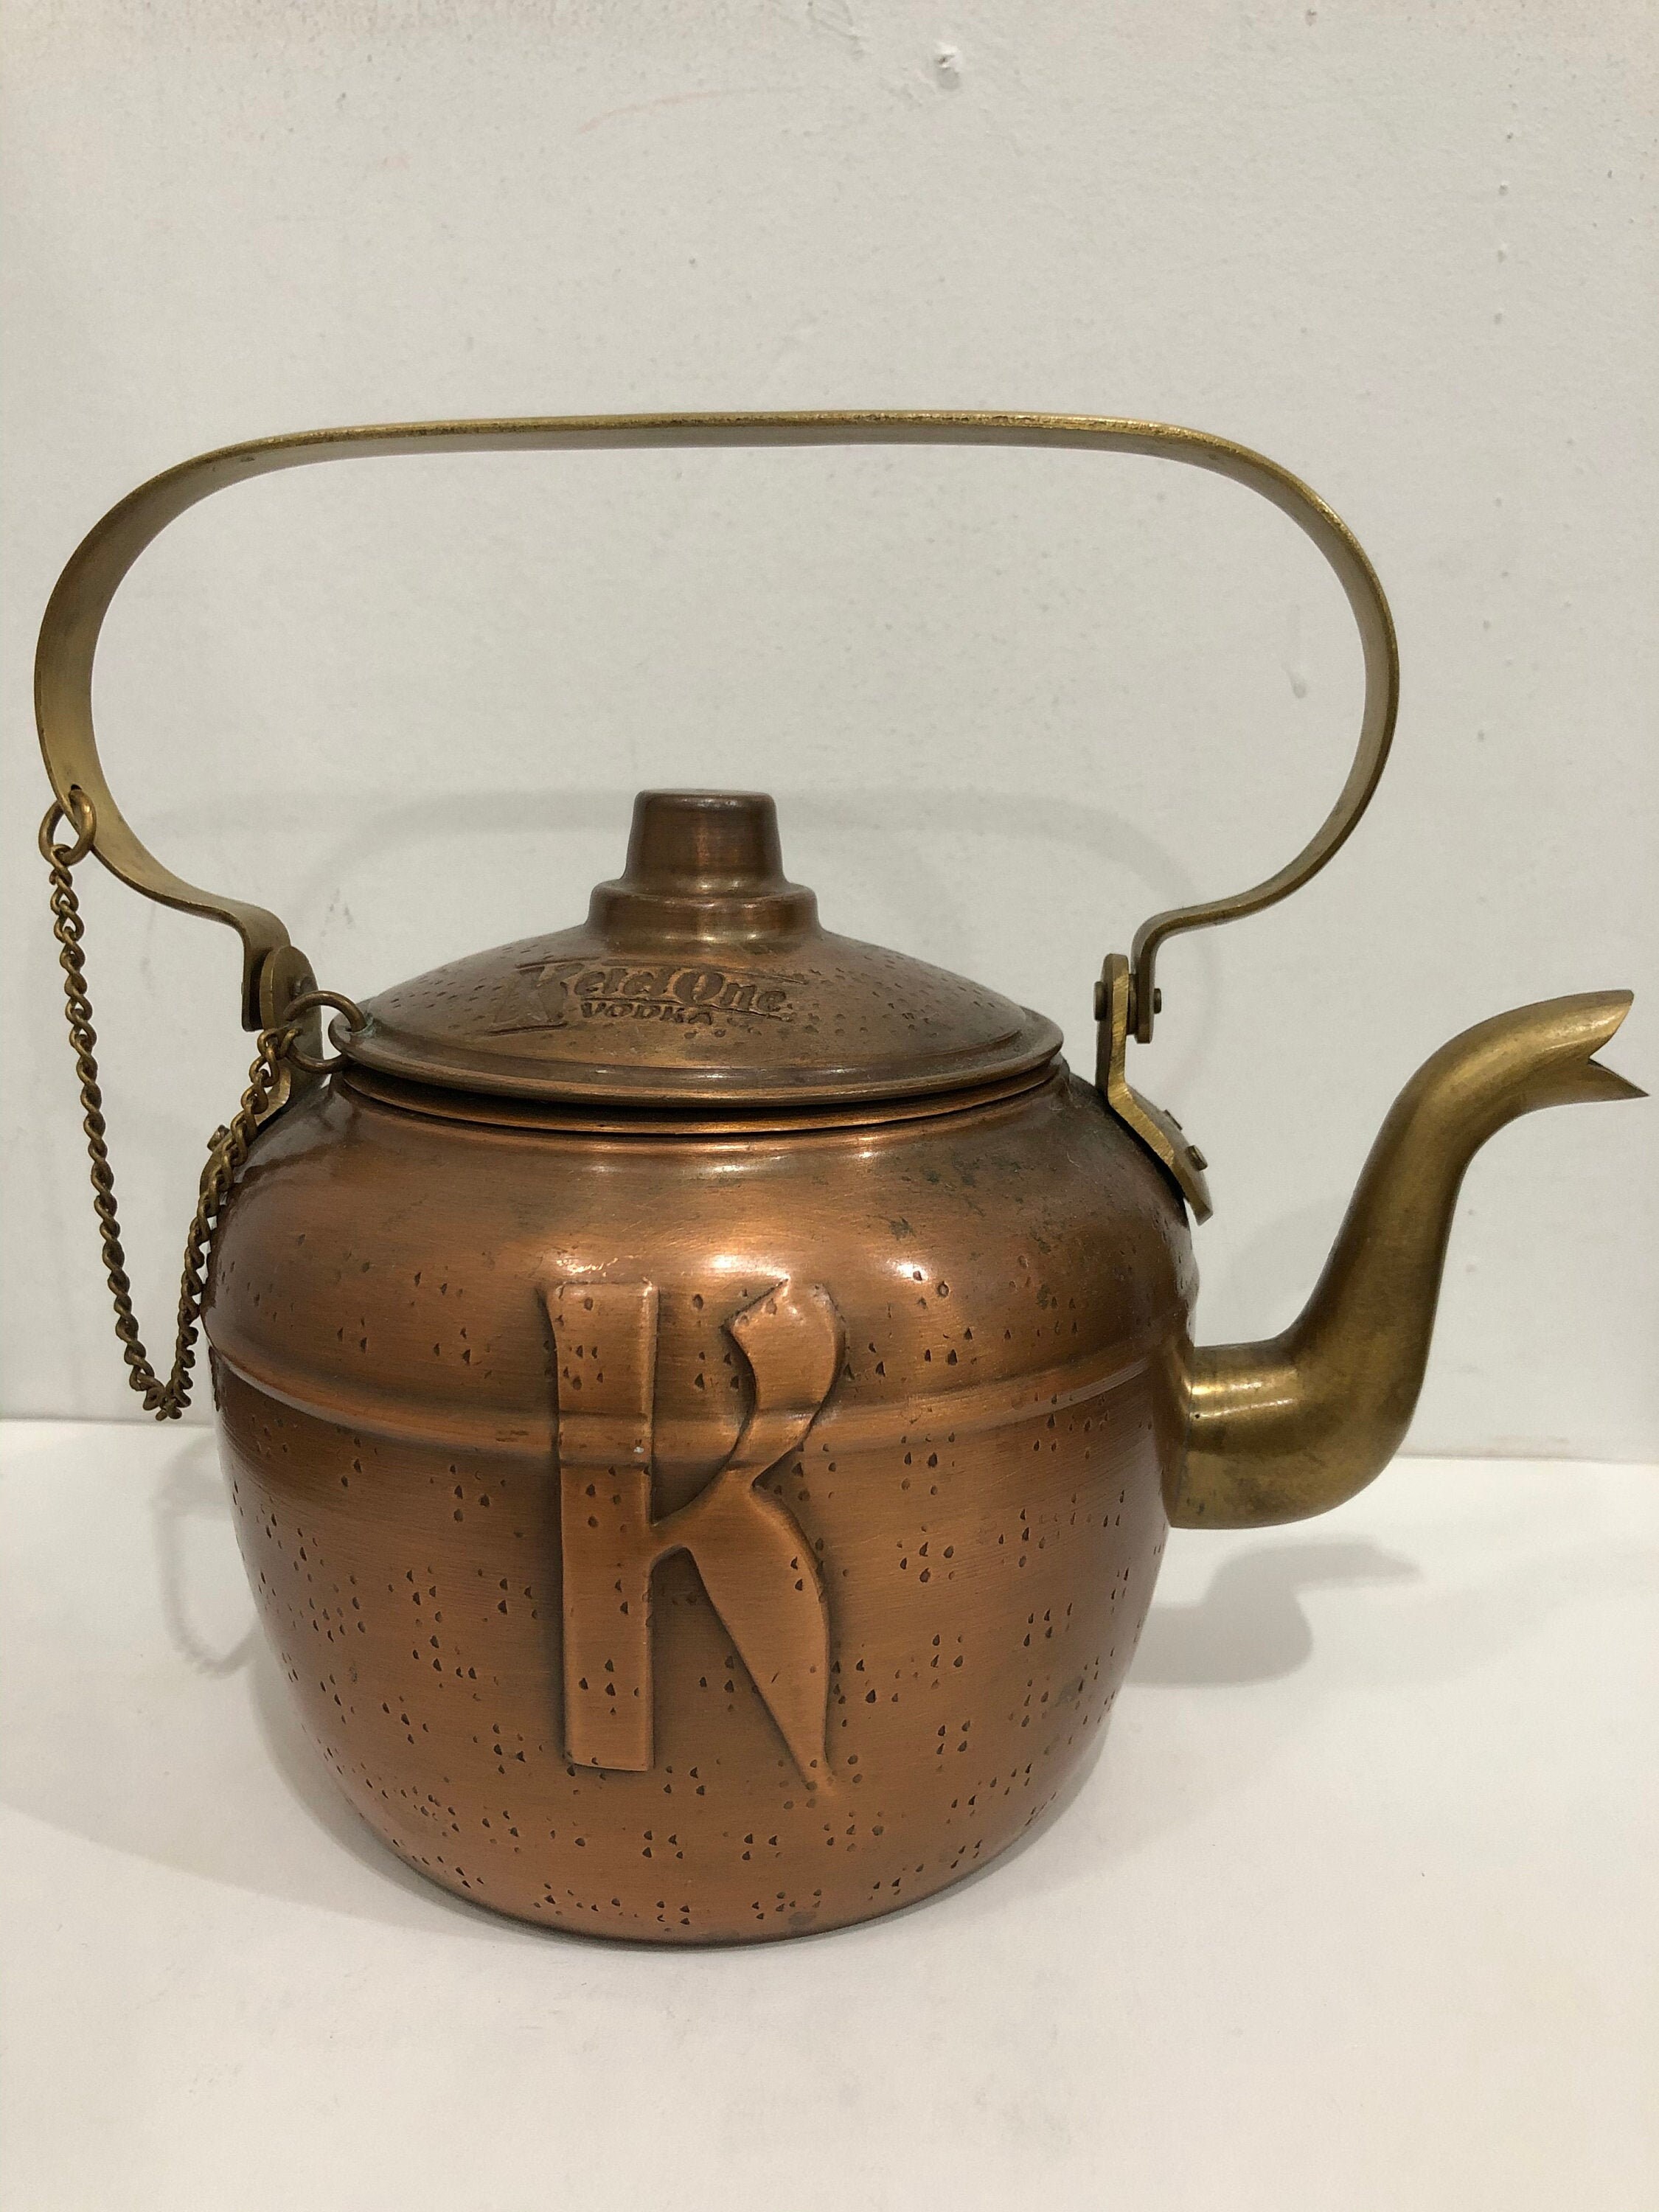 Vintage Premier System Electric Copper Tea Kettle Pot Made in